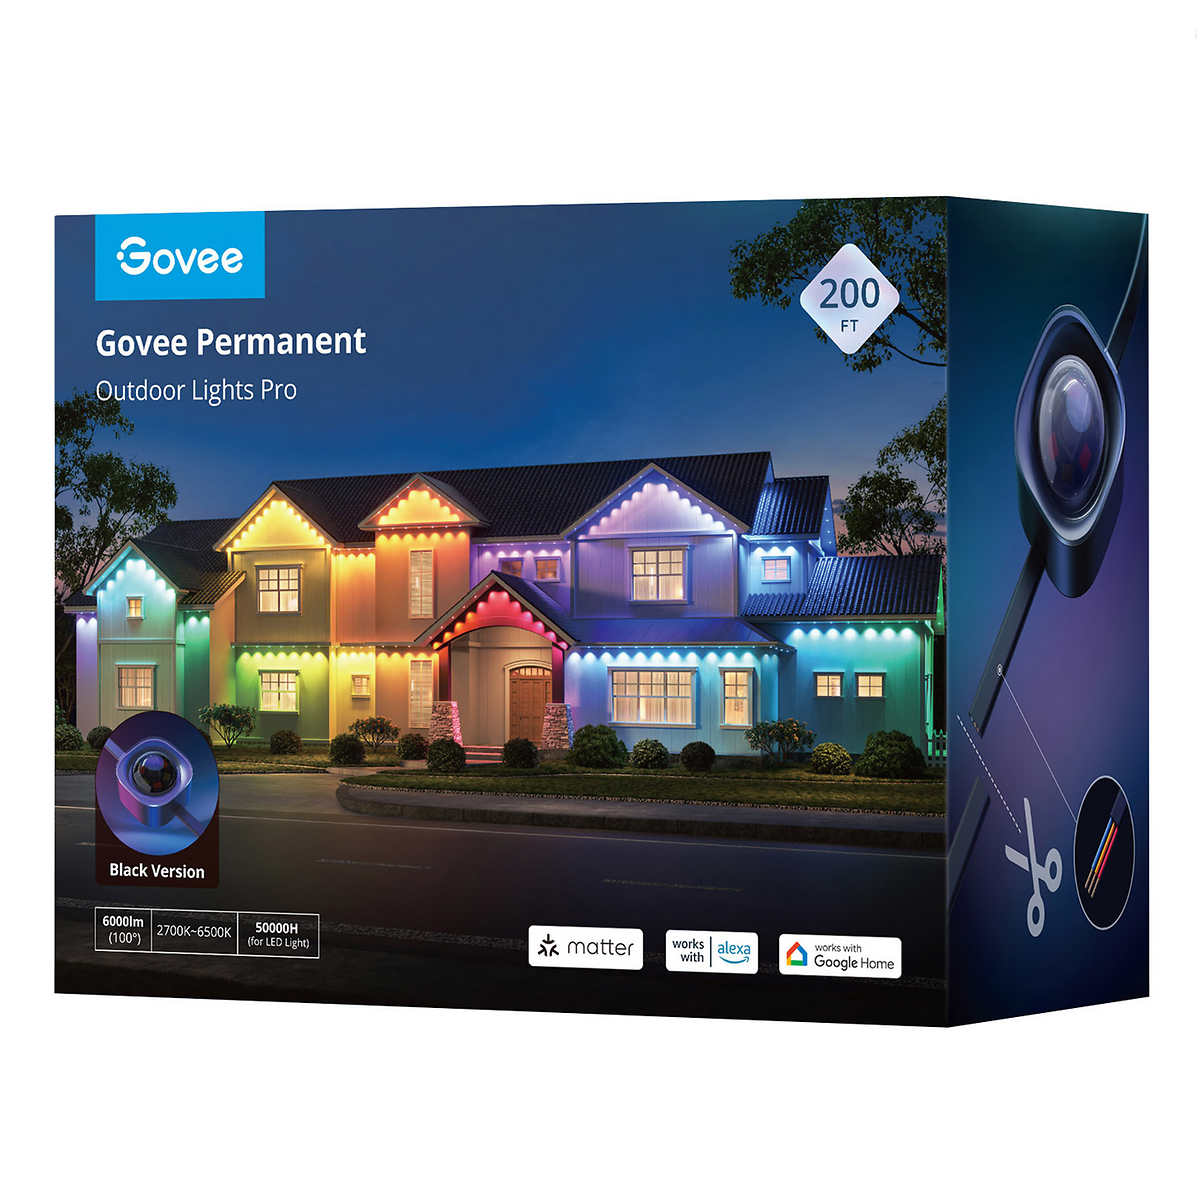 Govee 200' Permanent Outdoor Lights Pro